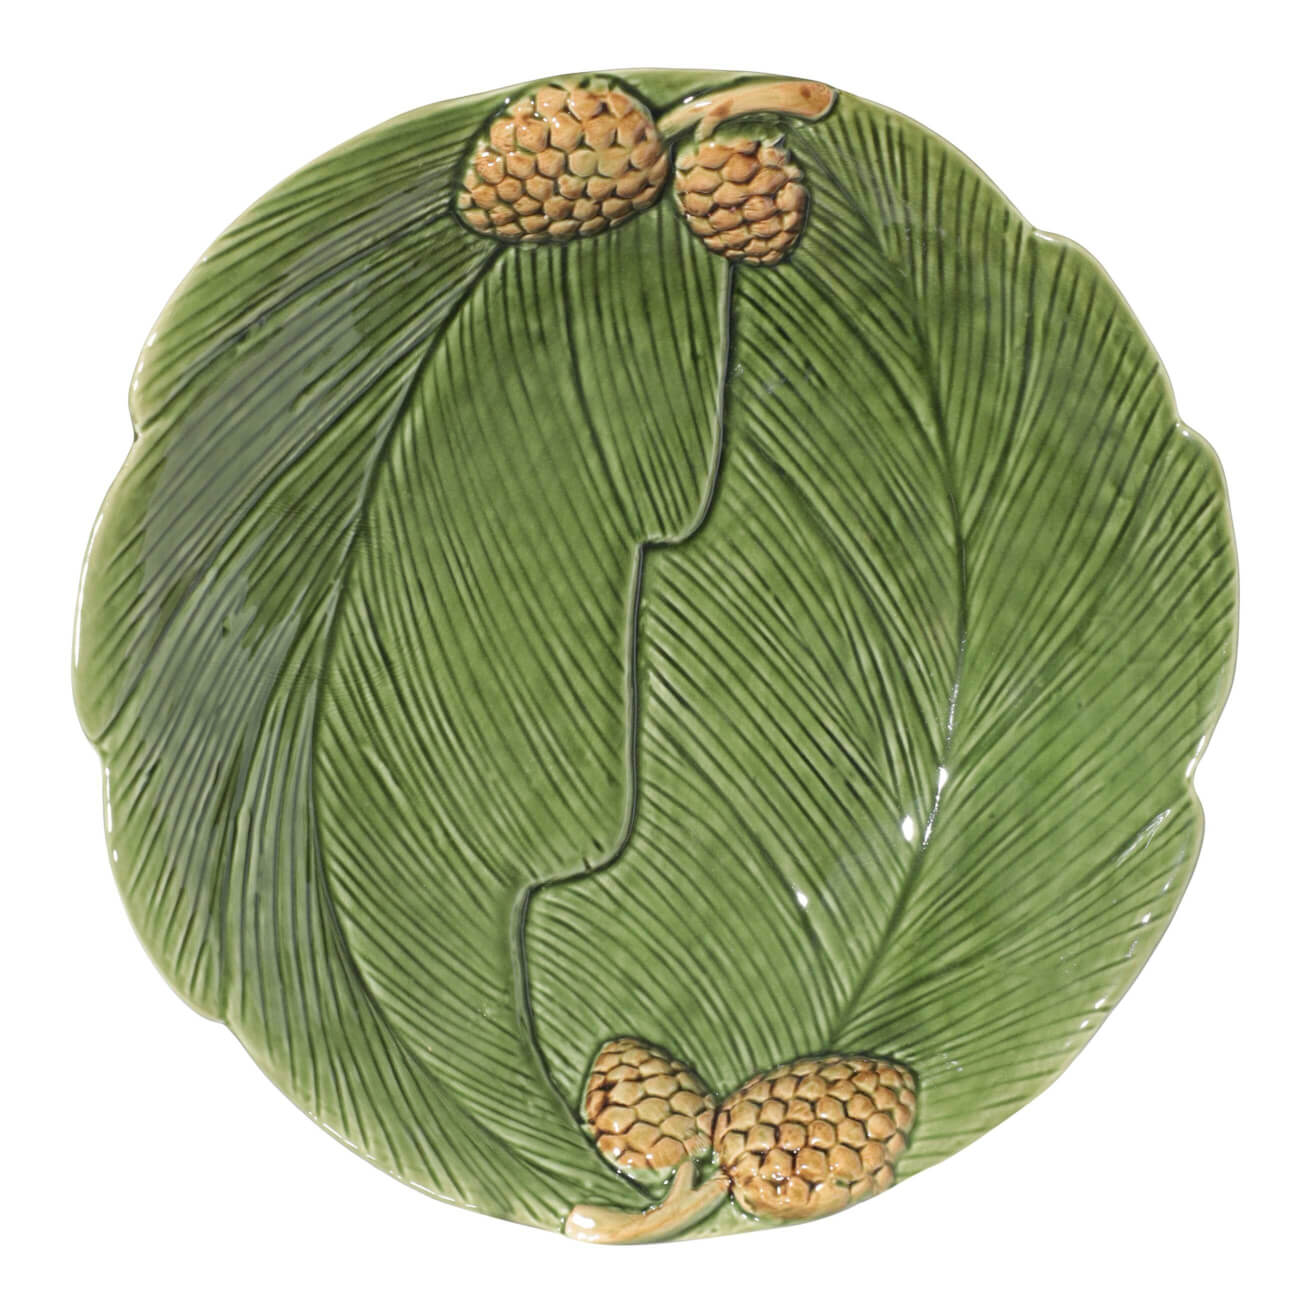 Блюдо, 26 см, керамика, круглое, зеленое, Шишки на листе, Fir cone блюдо 26 см керамика круглое зеленое шишки на листе fir cone